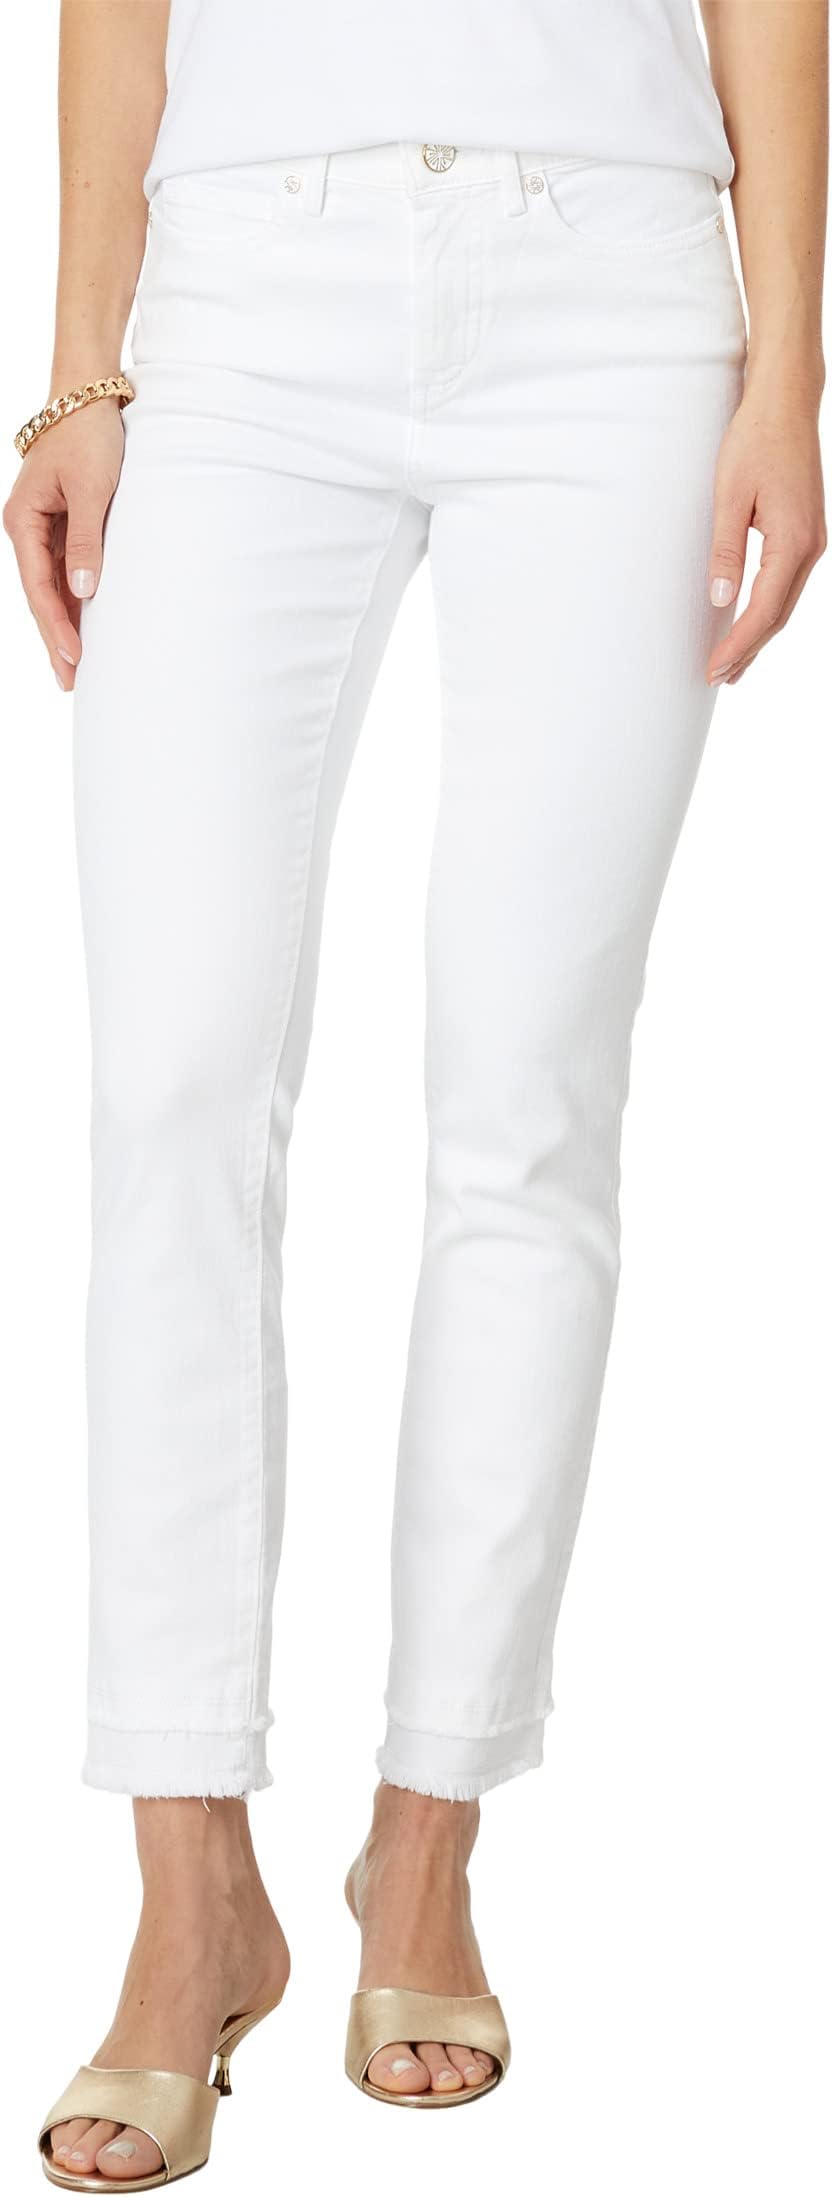 Джинсы South Ocean High-Rise Skinny Jeans in Resort White Lilly Pulitzer, цвет Resort White larina resort